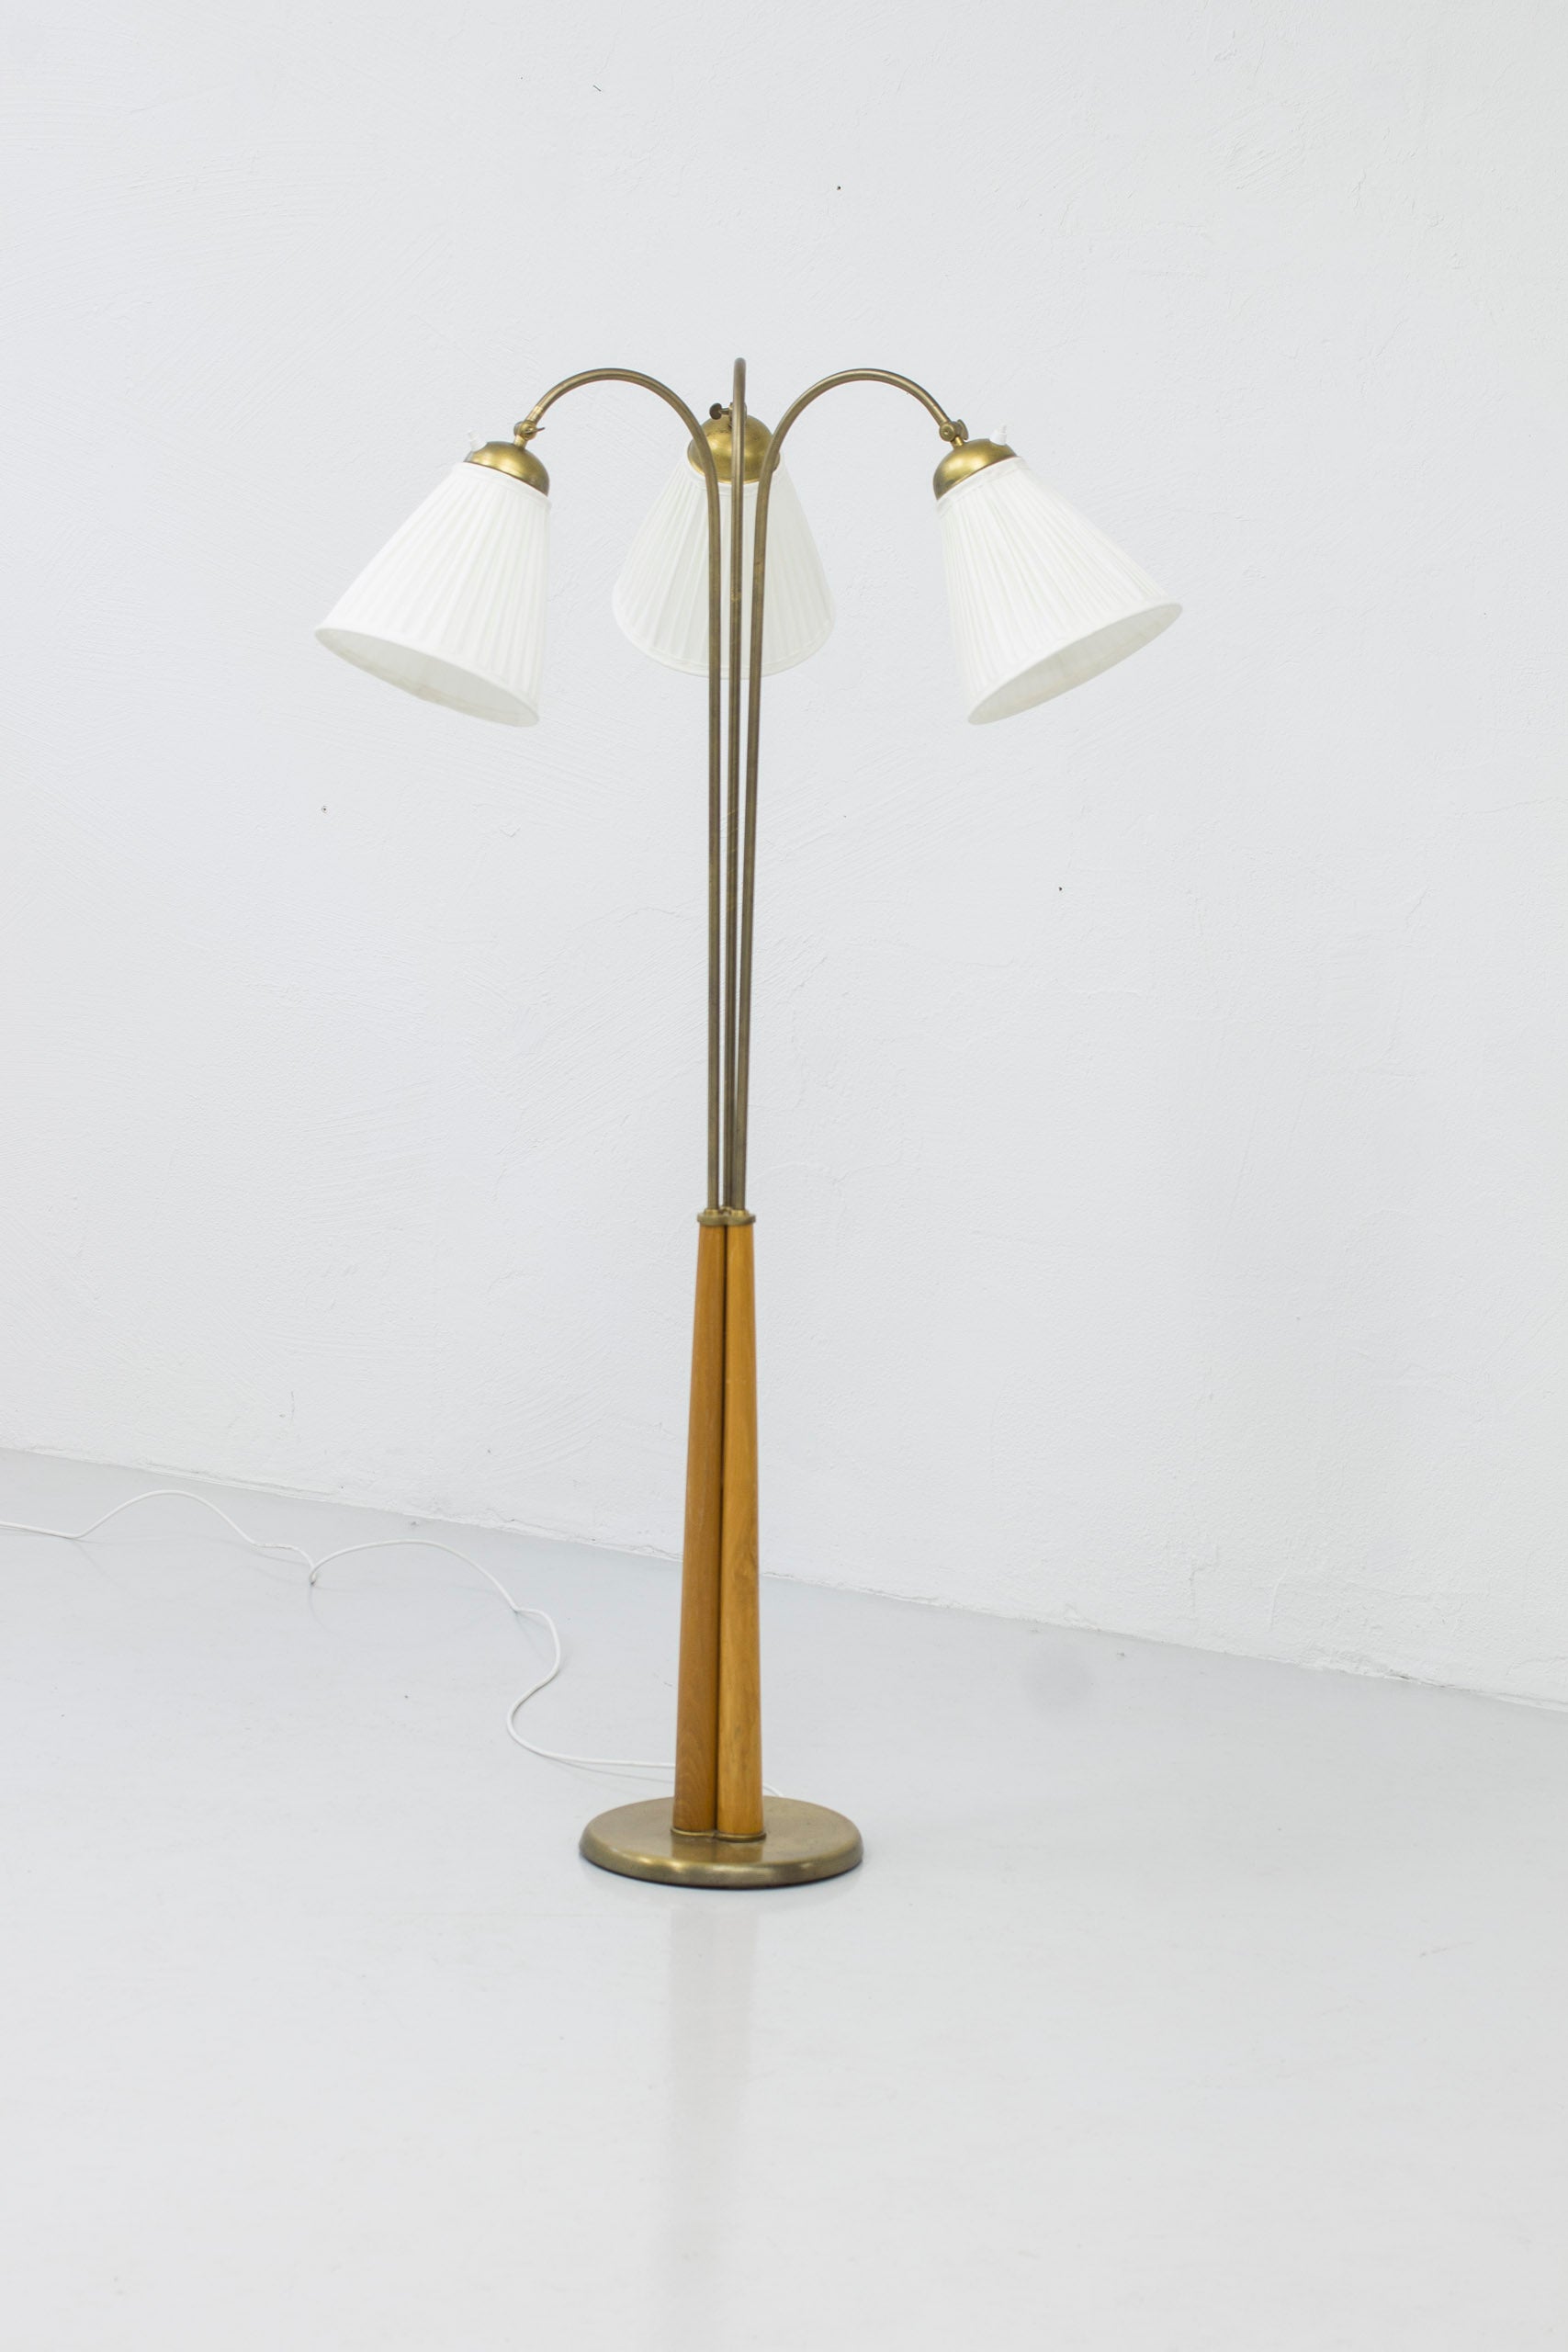 Swedish modern floor lamp